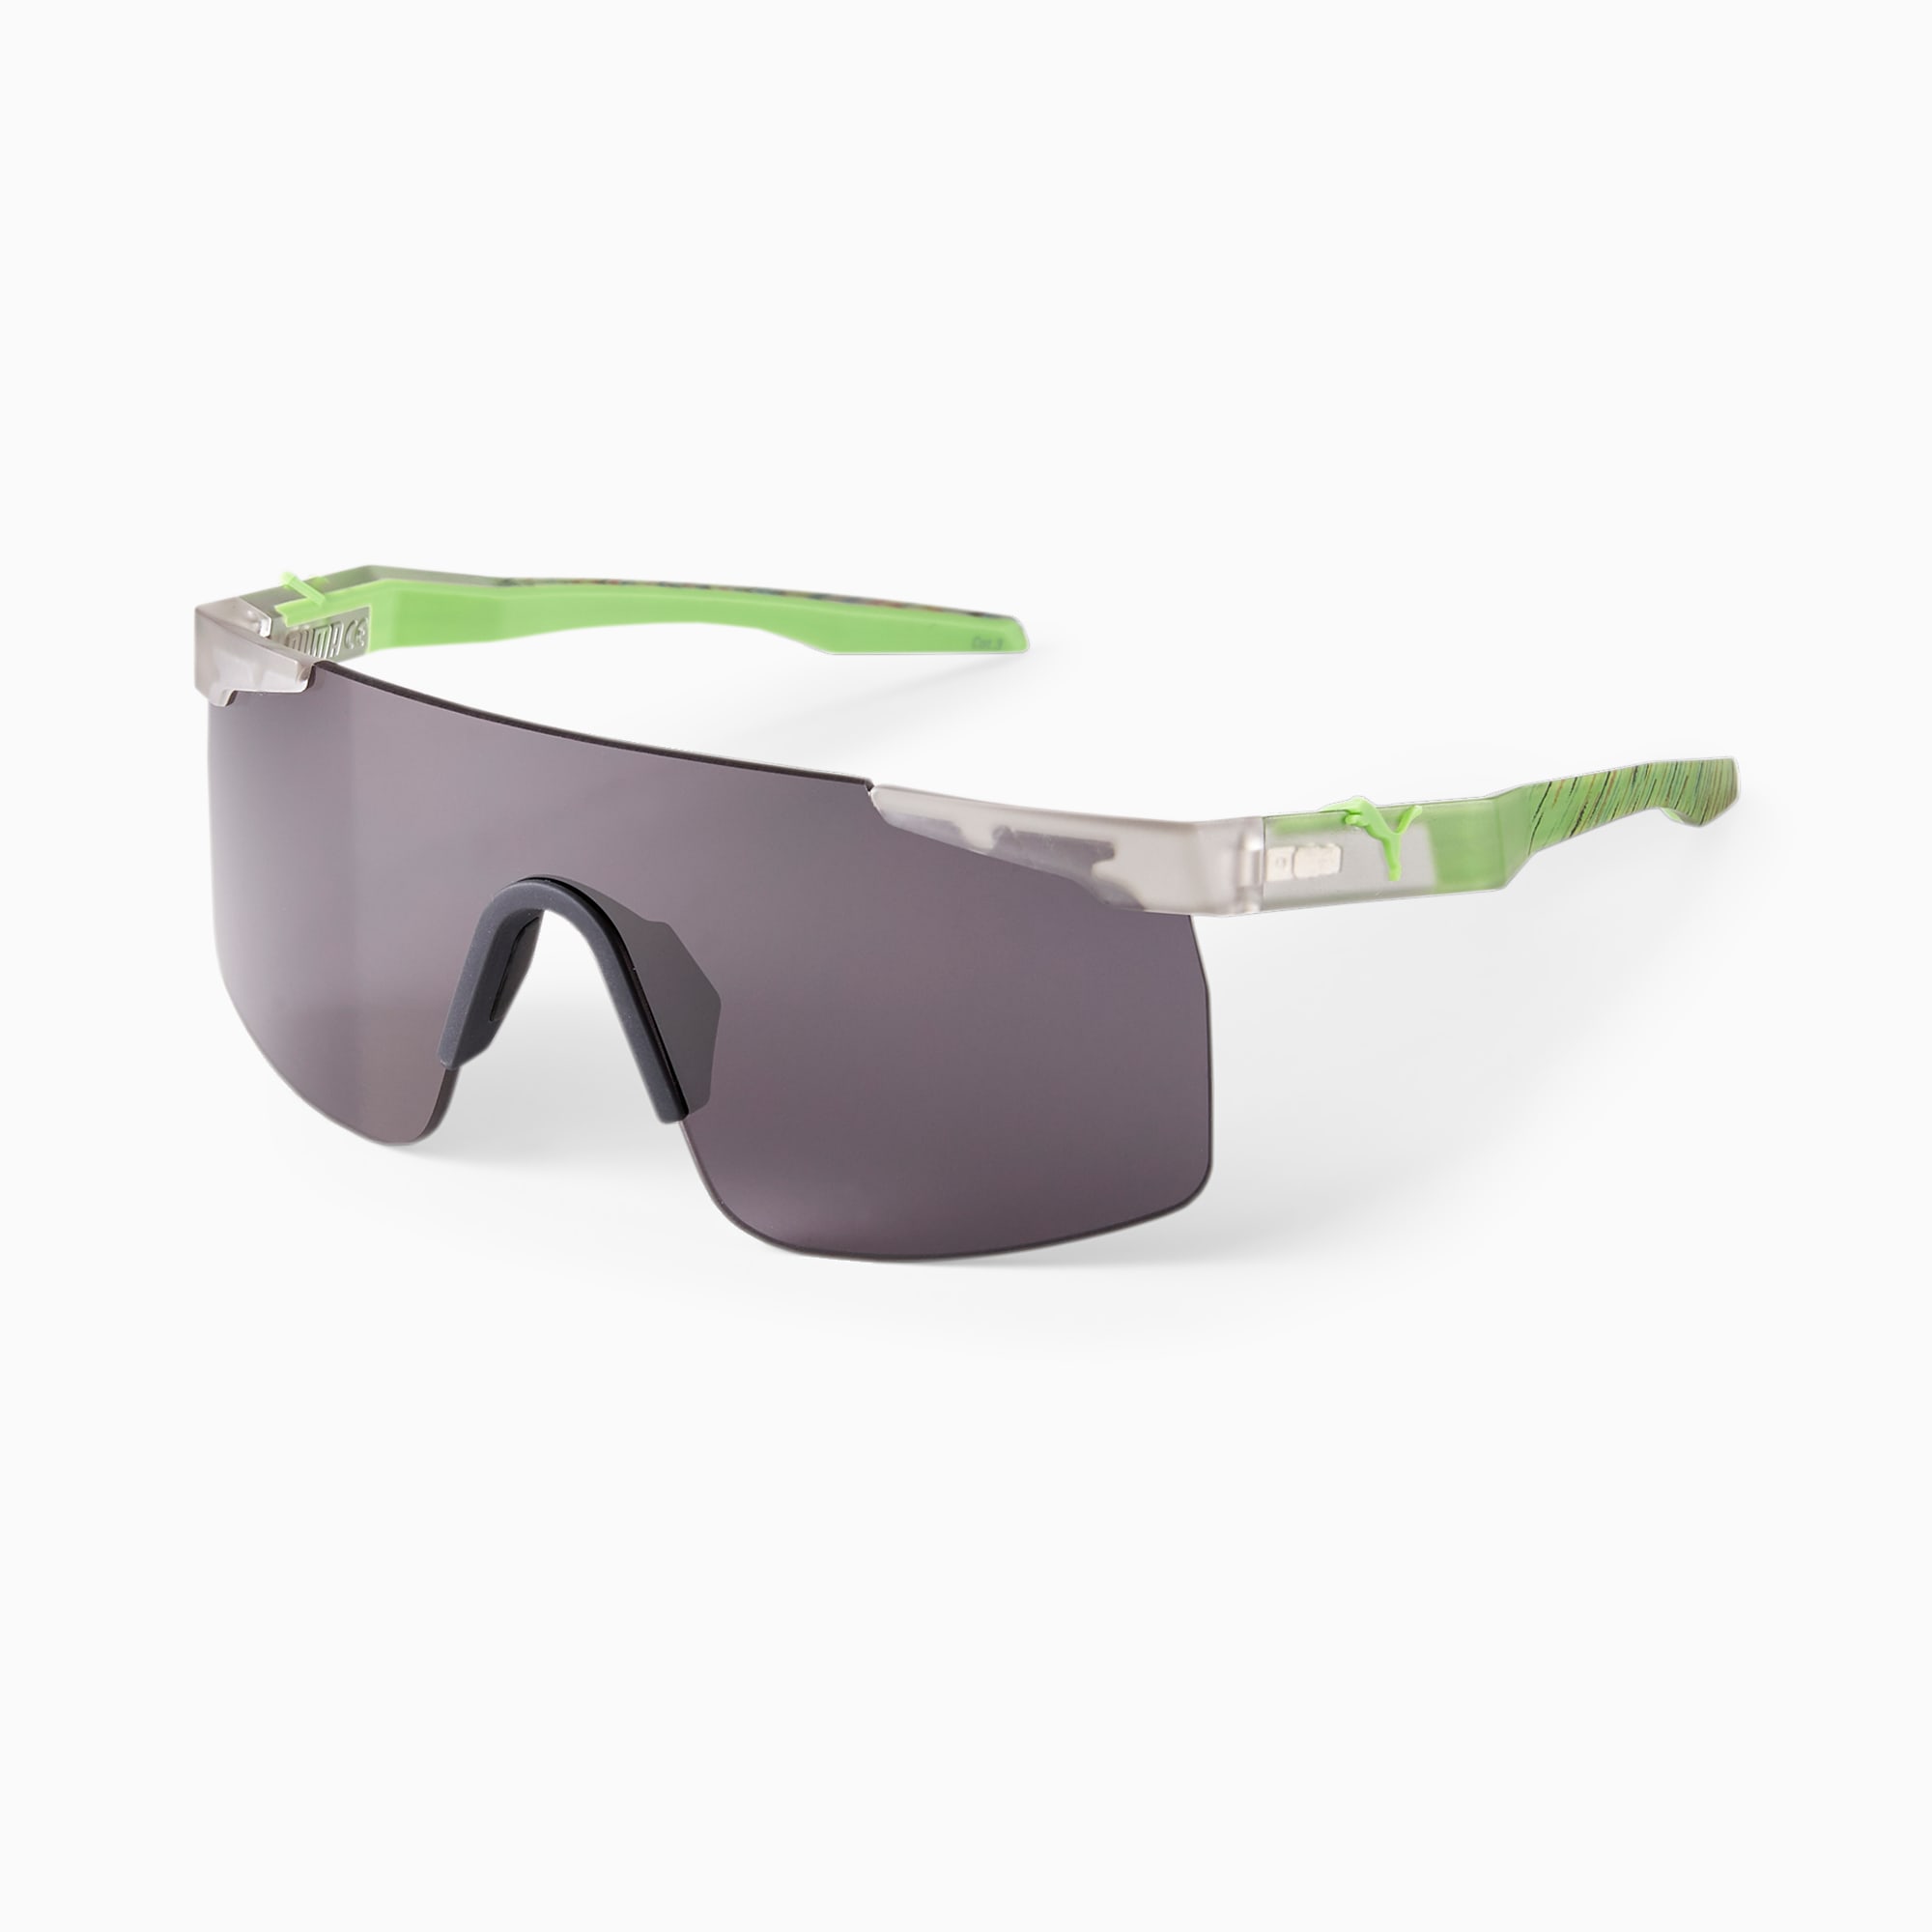 Blade 3D Pro v1 Men's Running Sunglasses